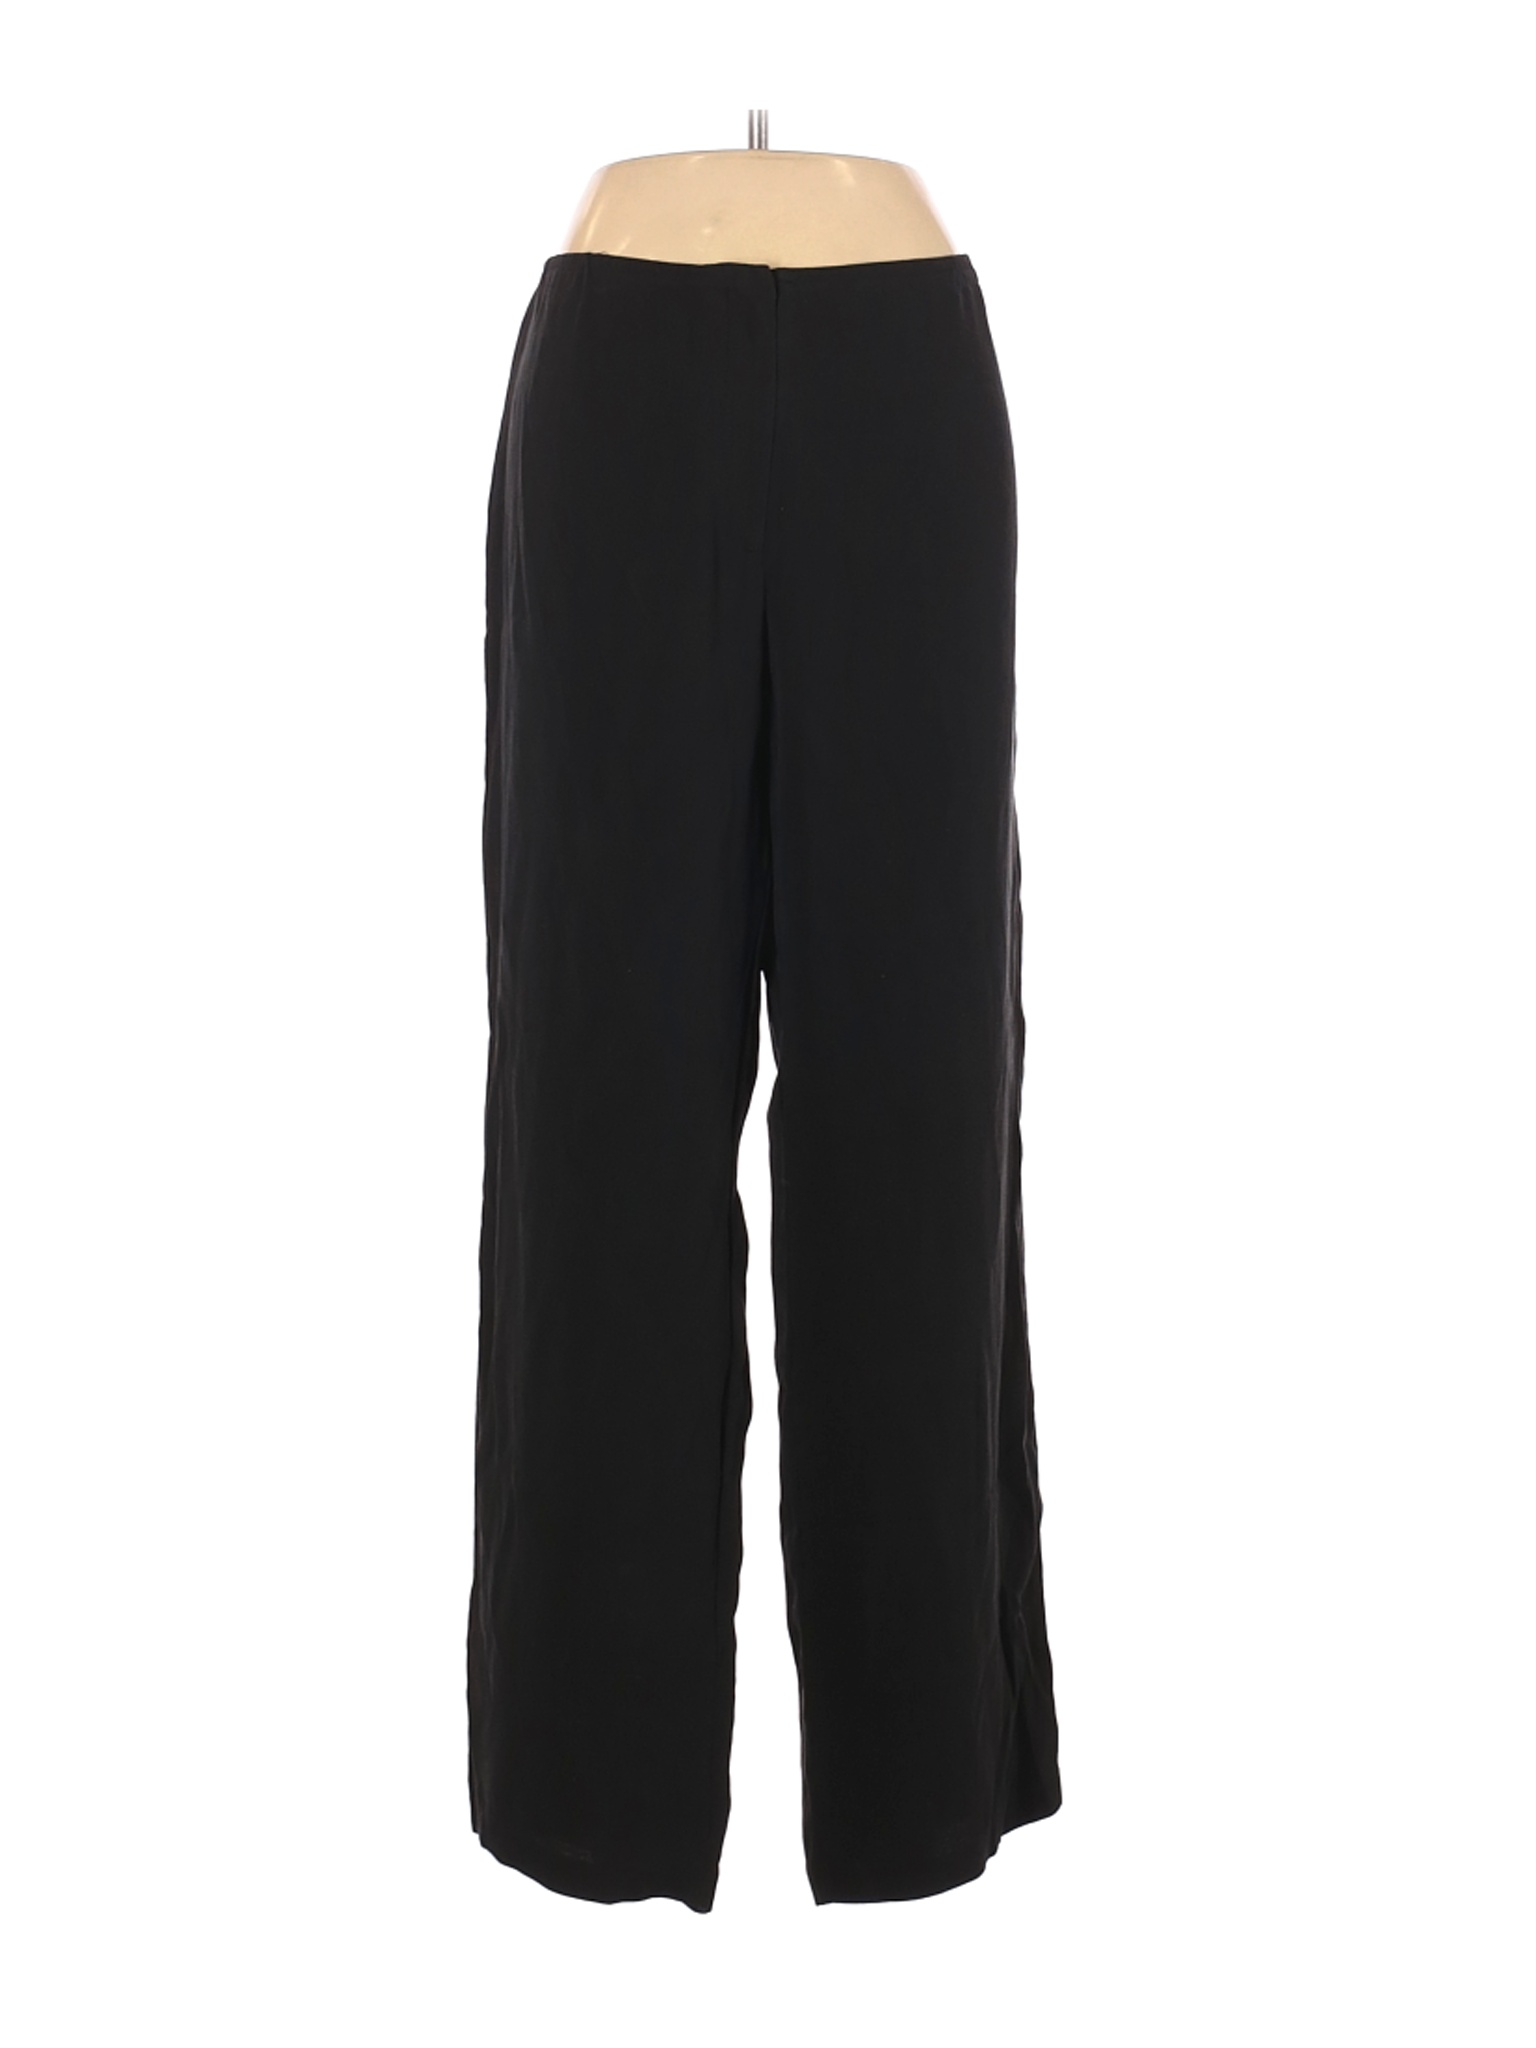 Elie Tahari Women Black Silk Pants M | eBay